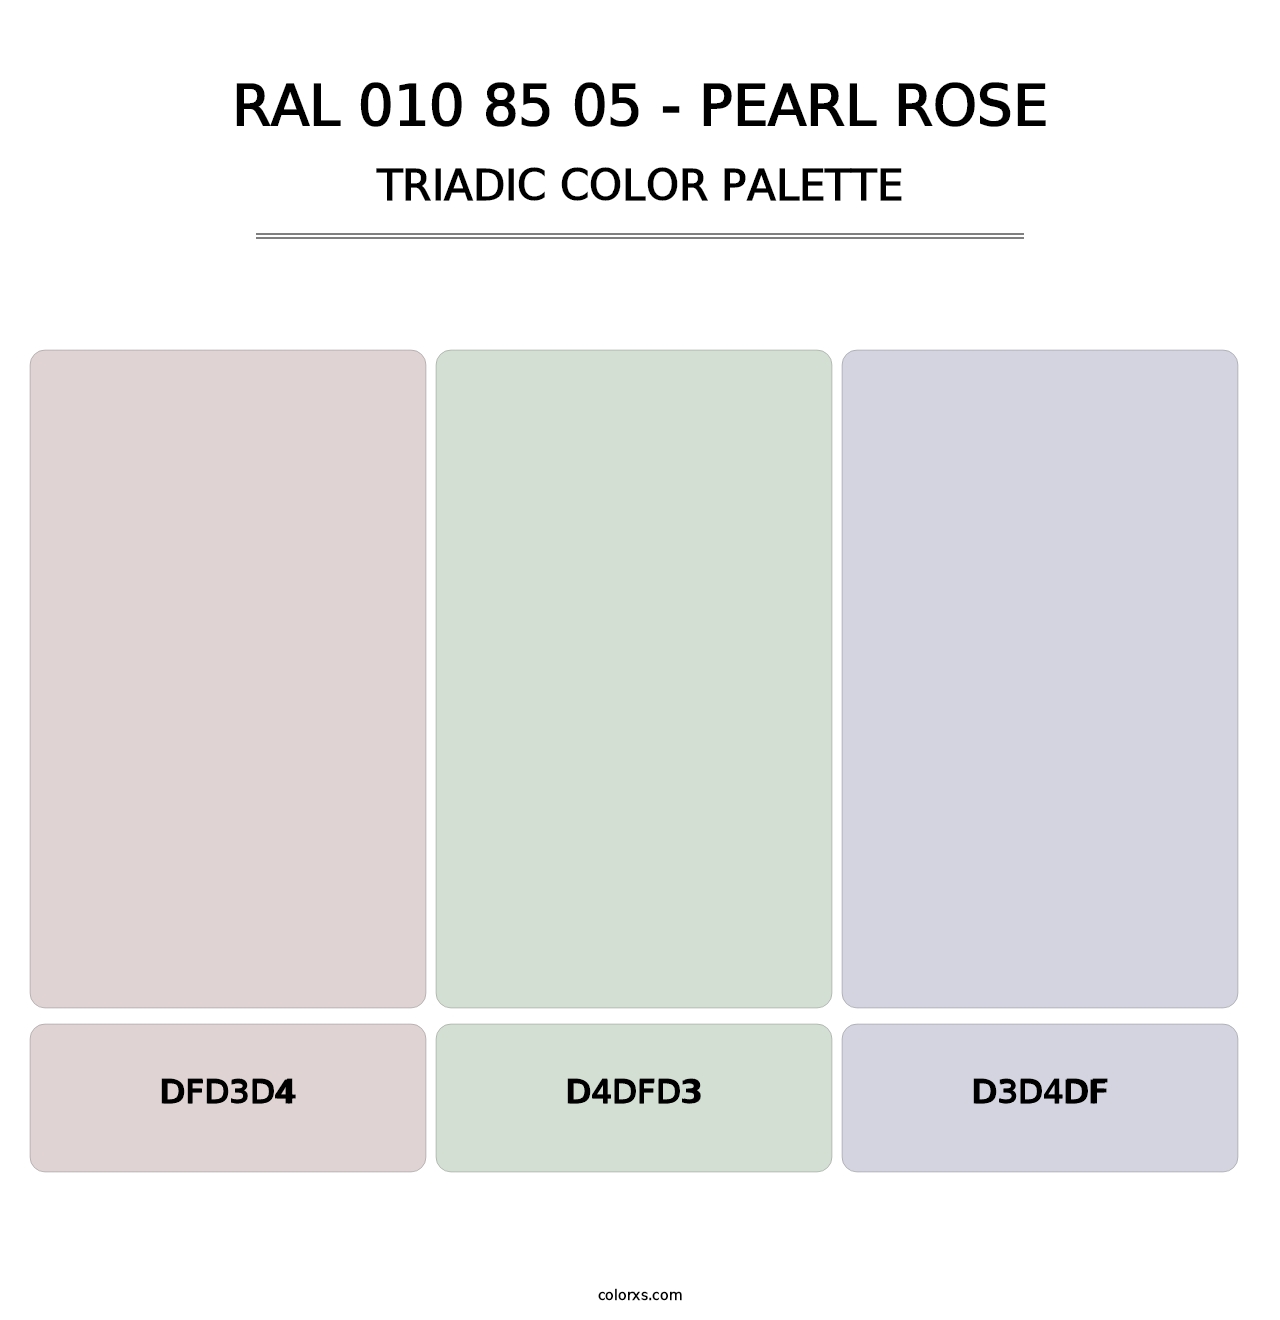 RAL 010 85 05 - Pearl Rose - Triadic Color Palette